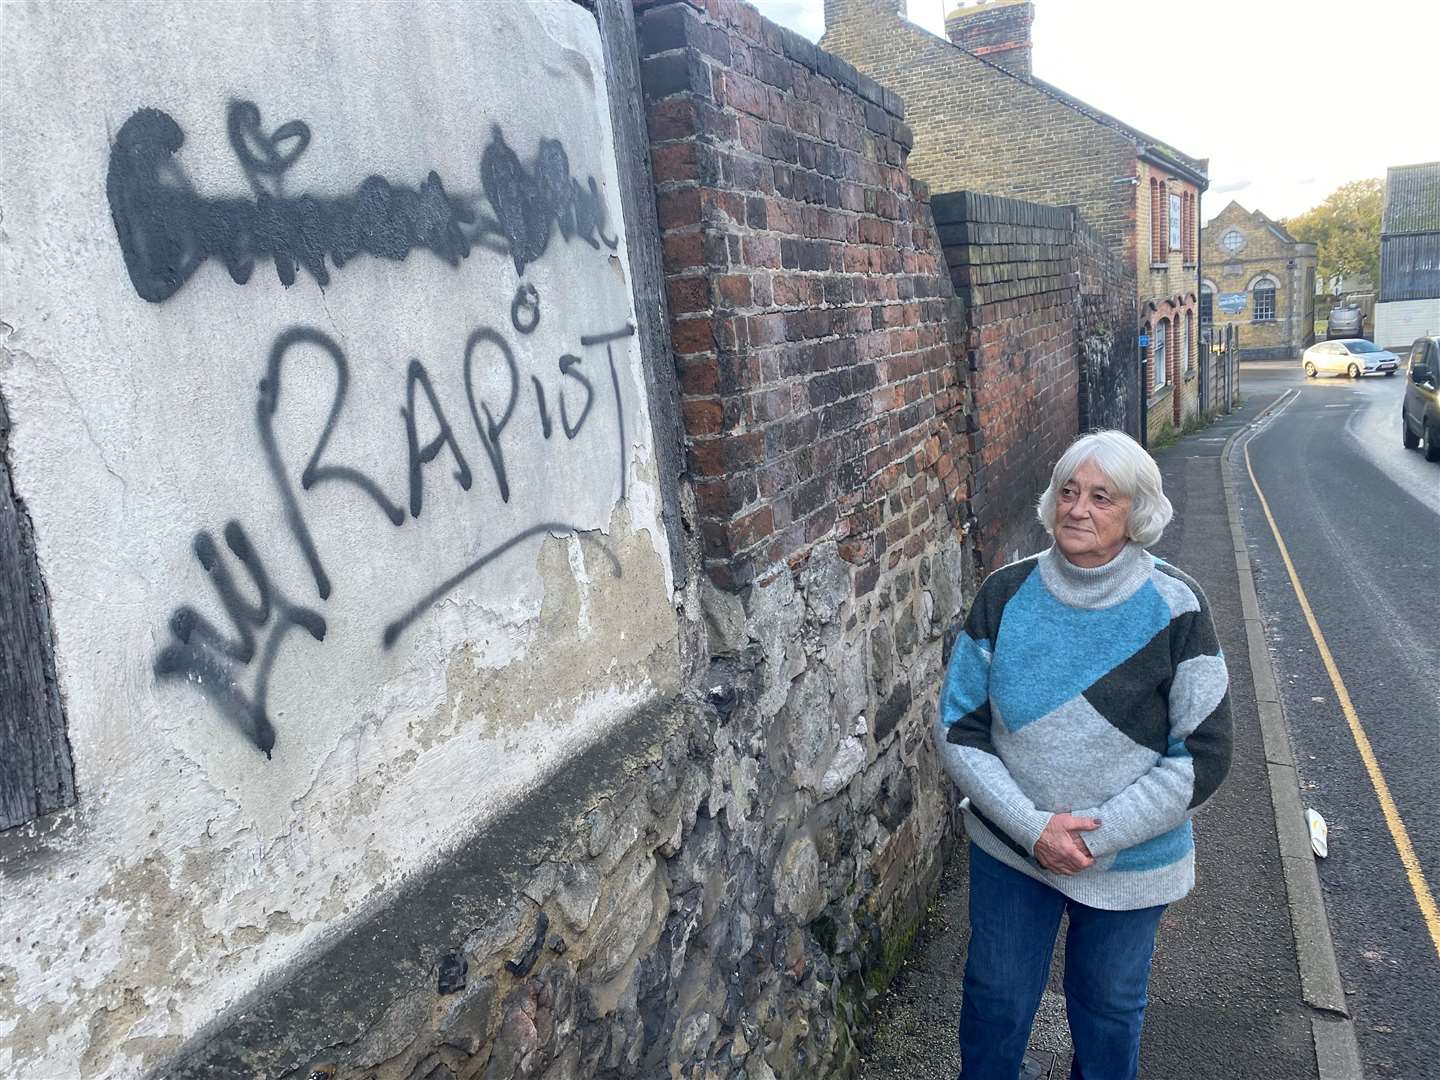 Sue Medhurst lives in Court Street, Faversham, and has seen graffiti vandals target her home